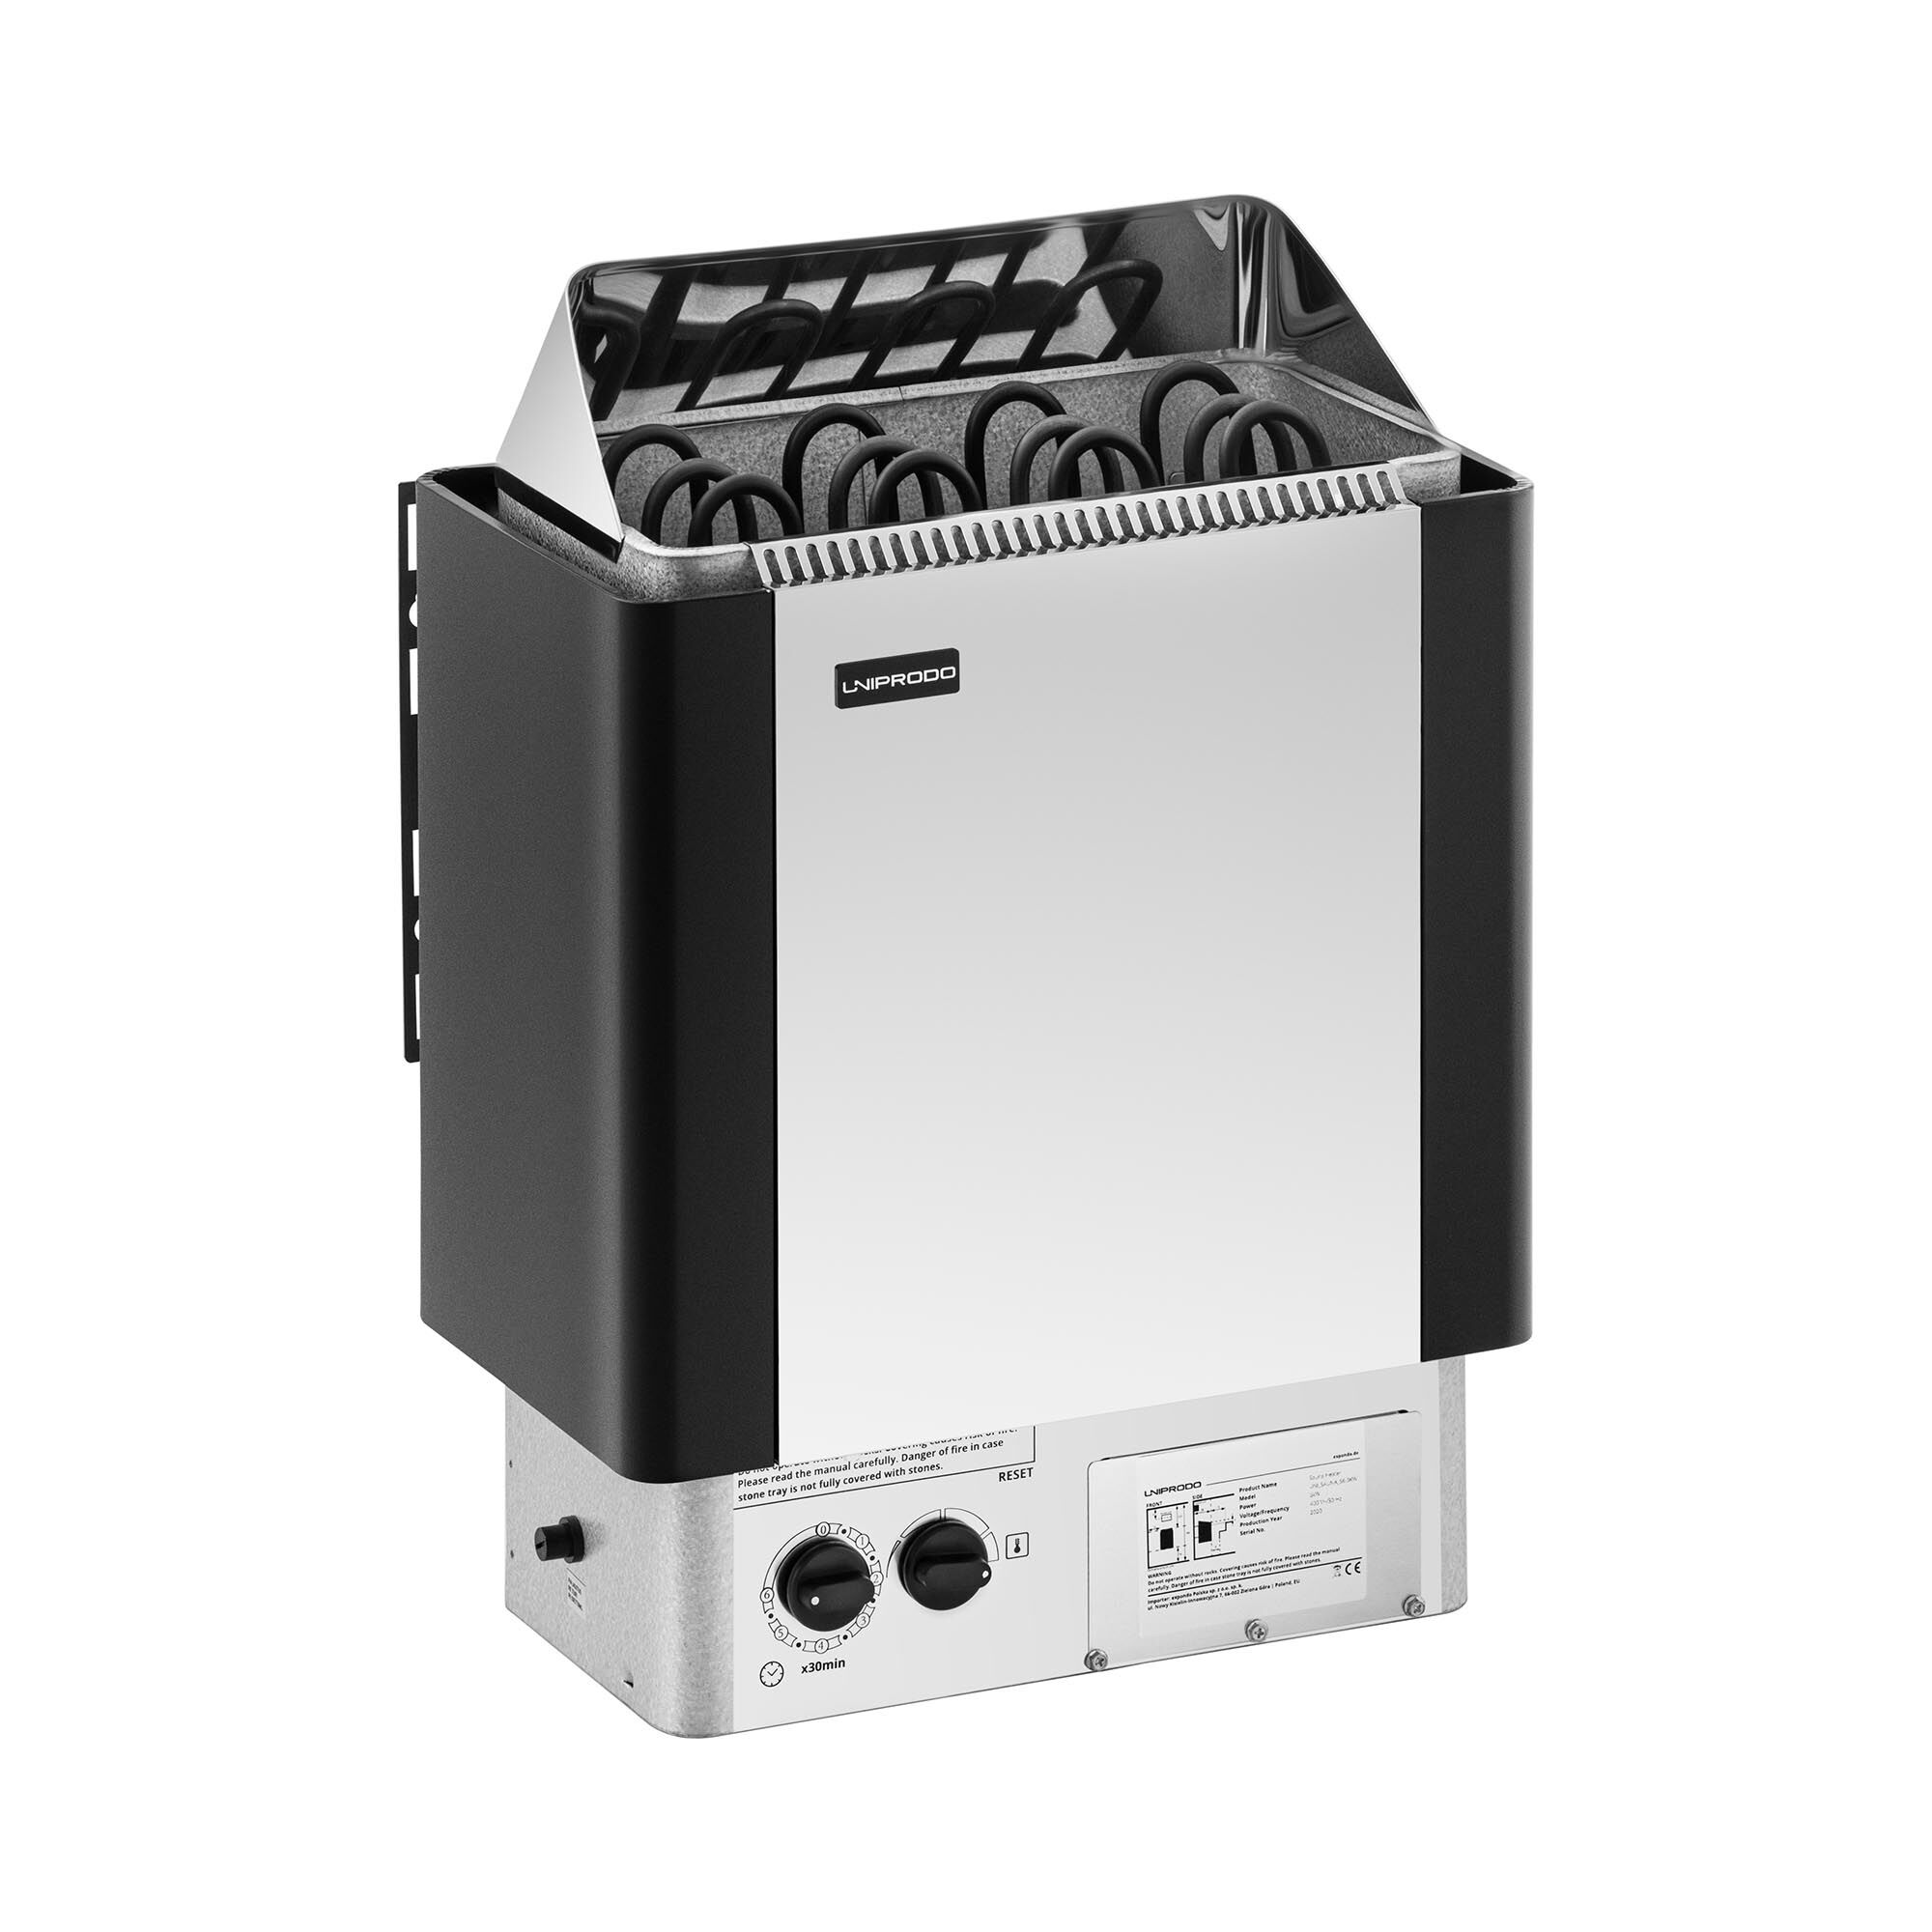 Uniprodo Saunaovn - 6 kW - 30 til 110 °C - inkl. kontrolpanel - rustfrit stål